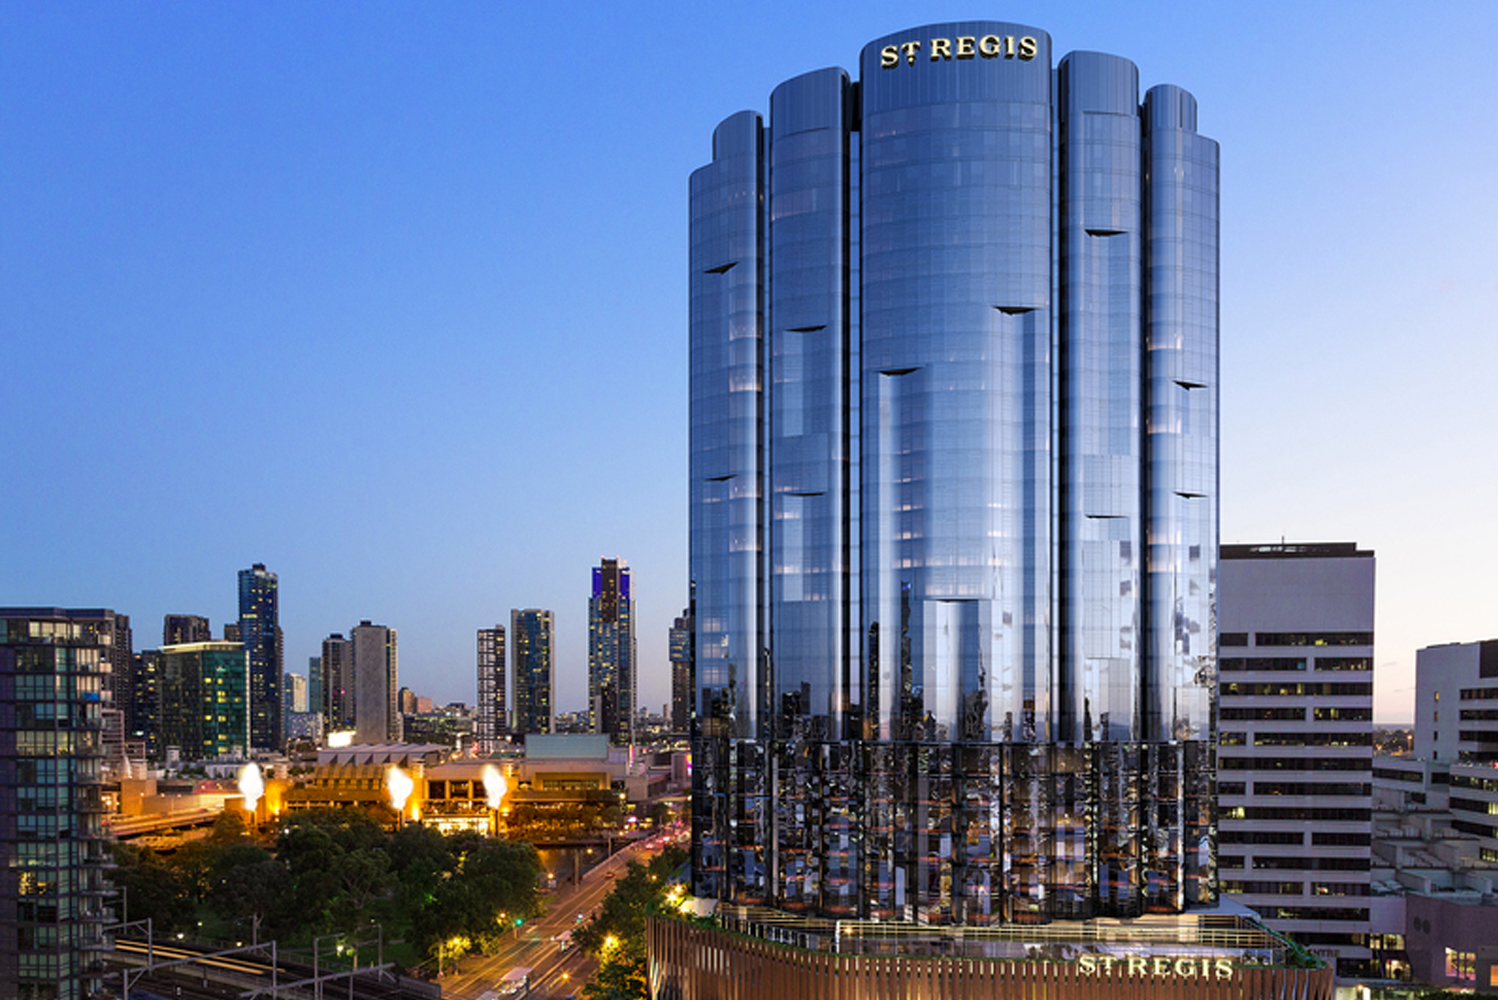 Fender Katsalidis Architects Chada design first St Regis Hotels  Resorts to debut in Australia in 2022